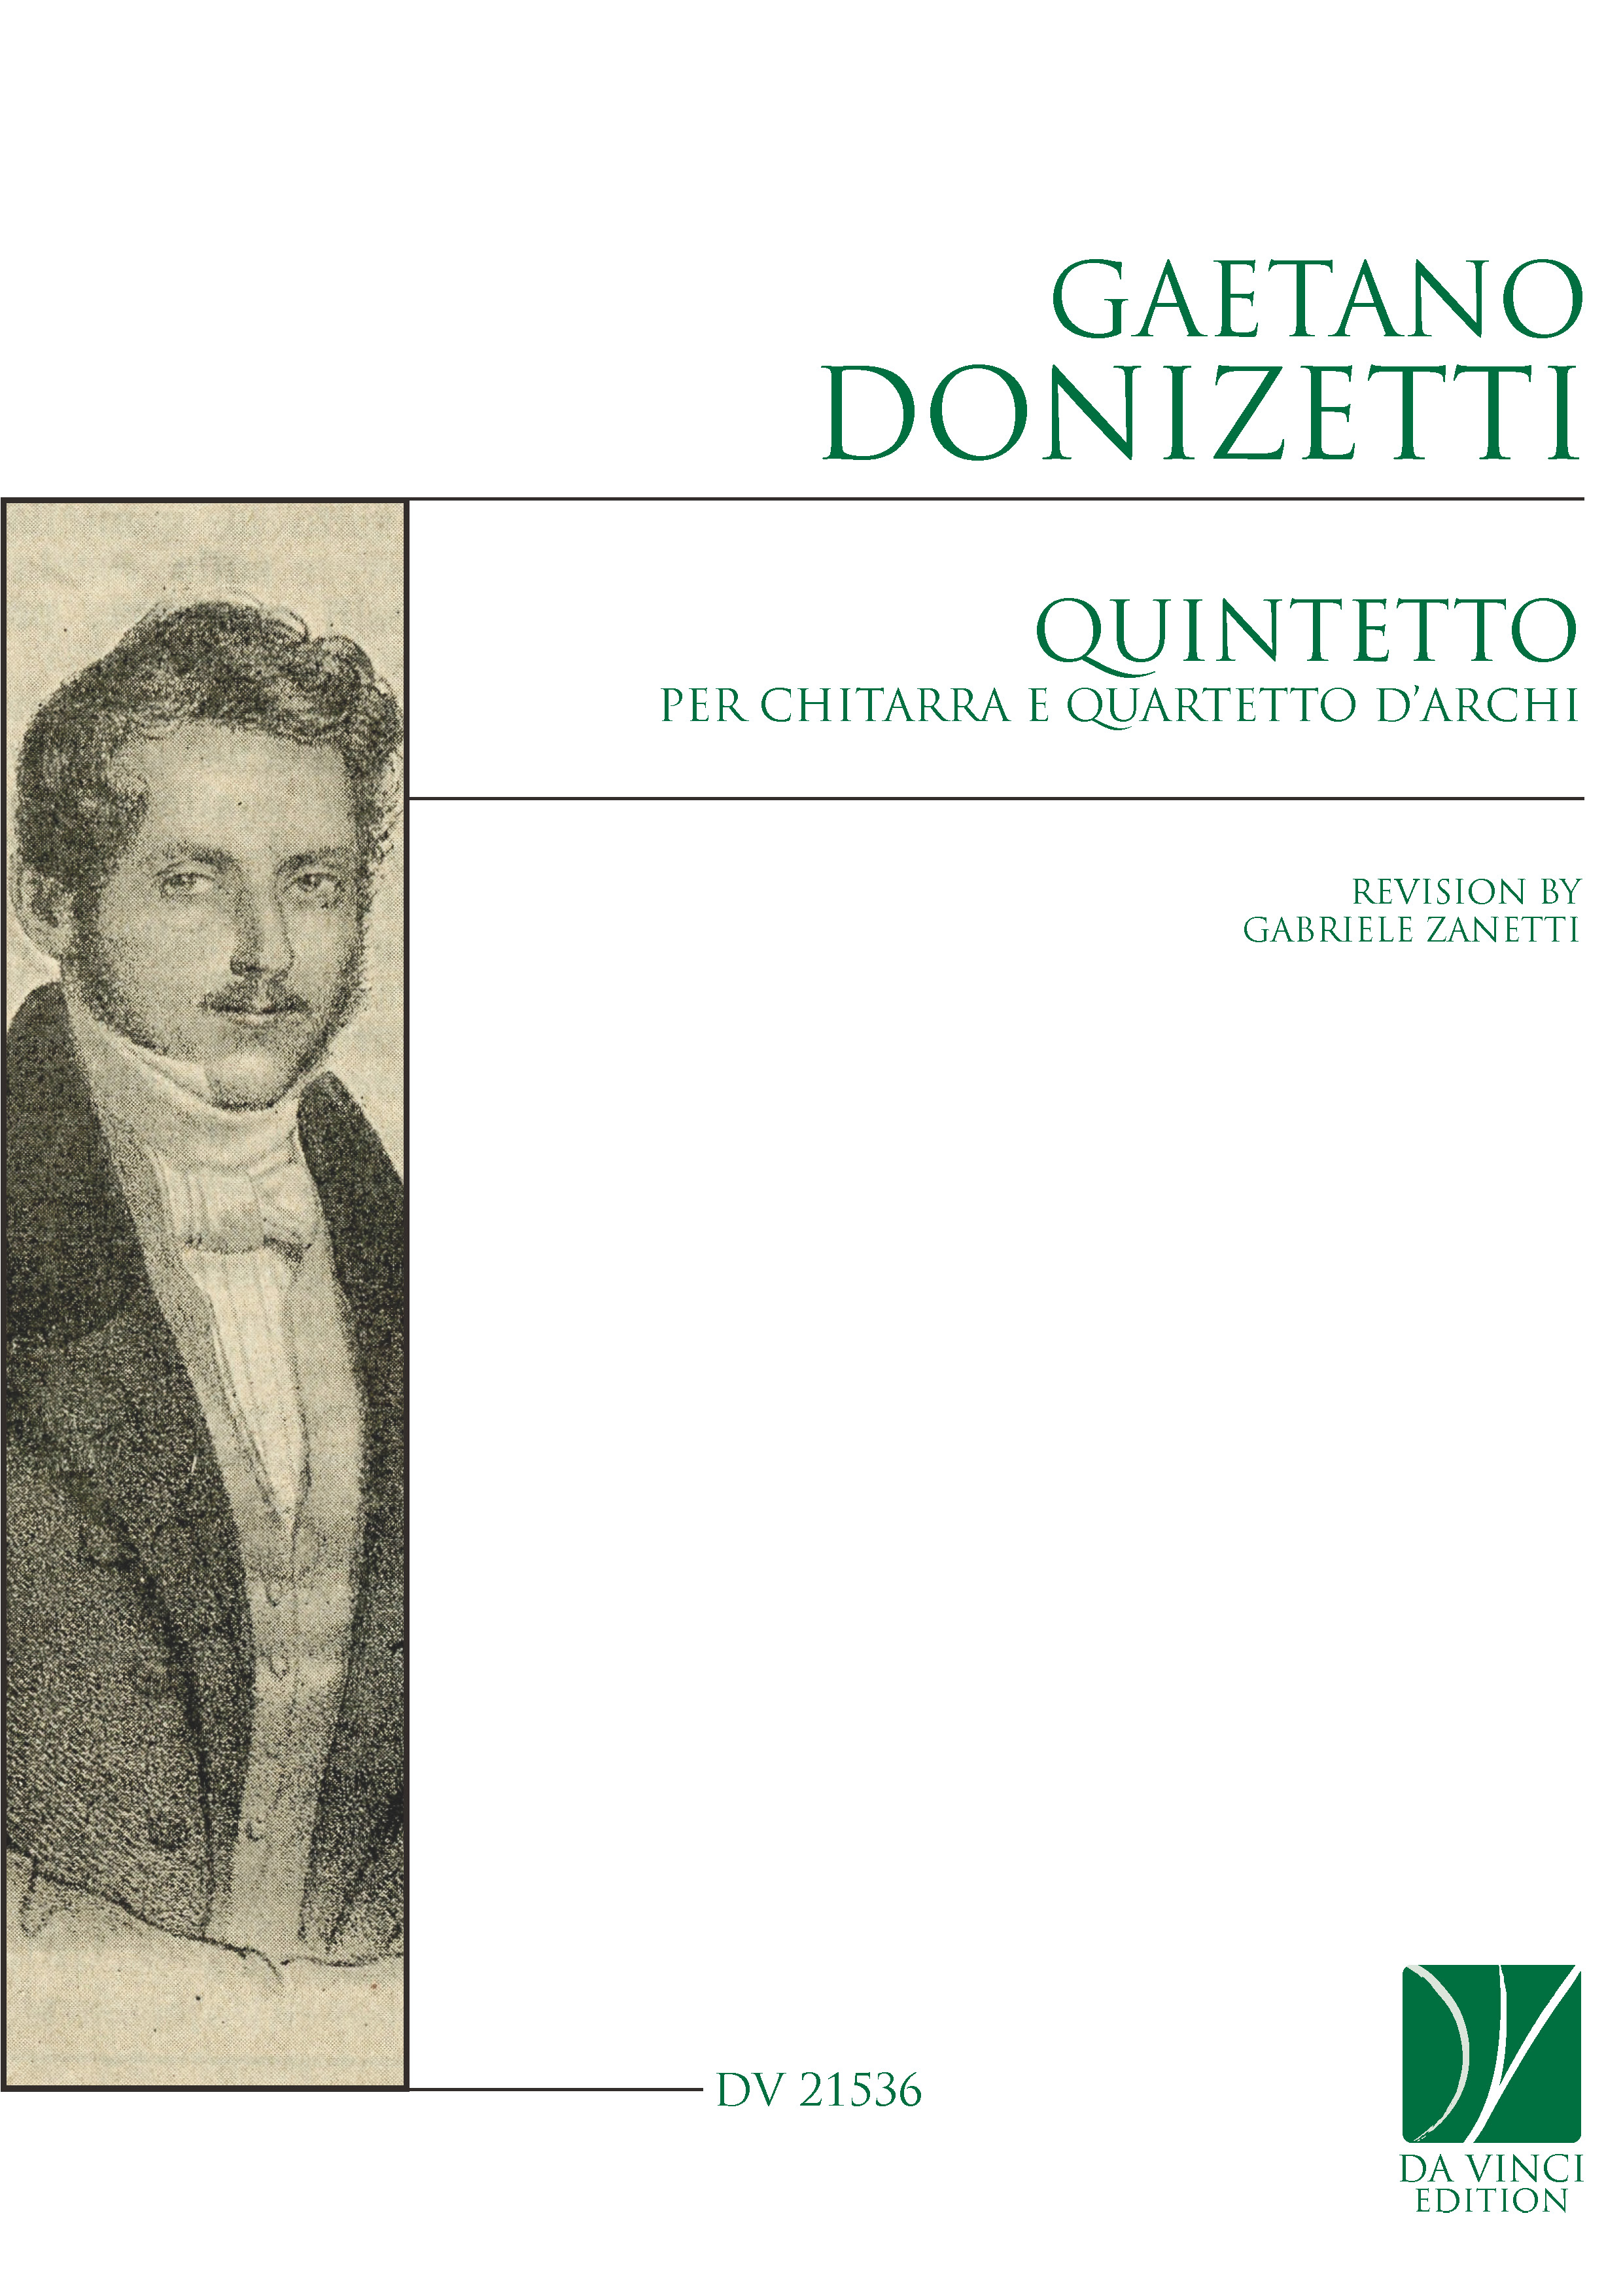 DV 21536 - Cover (Donizetti - Guitar Quintet) (1)